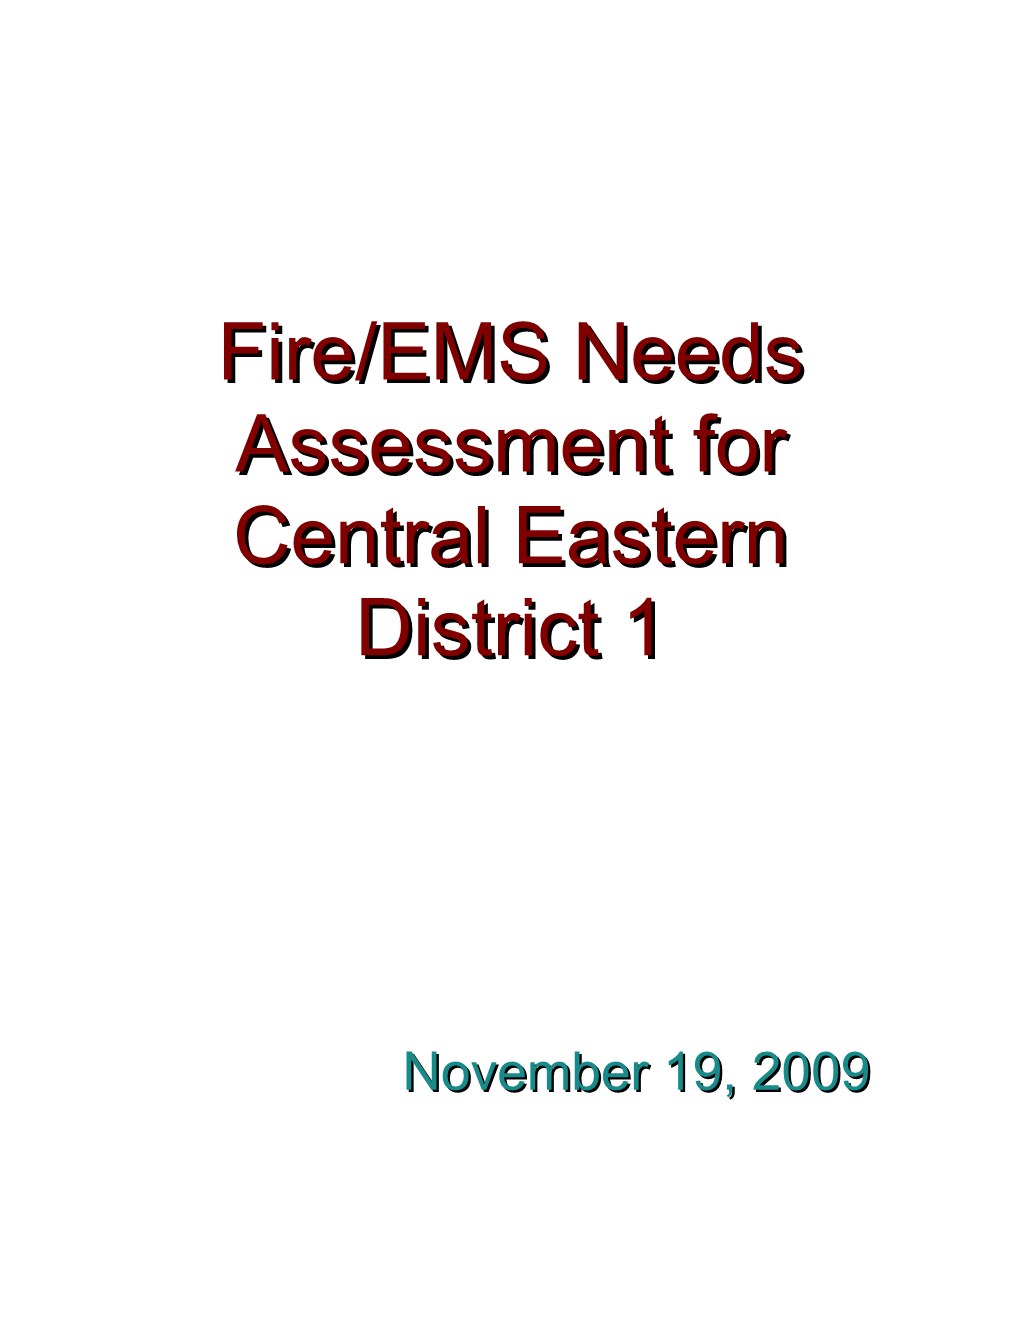 Fire/EMS Needs Assessment For